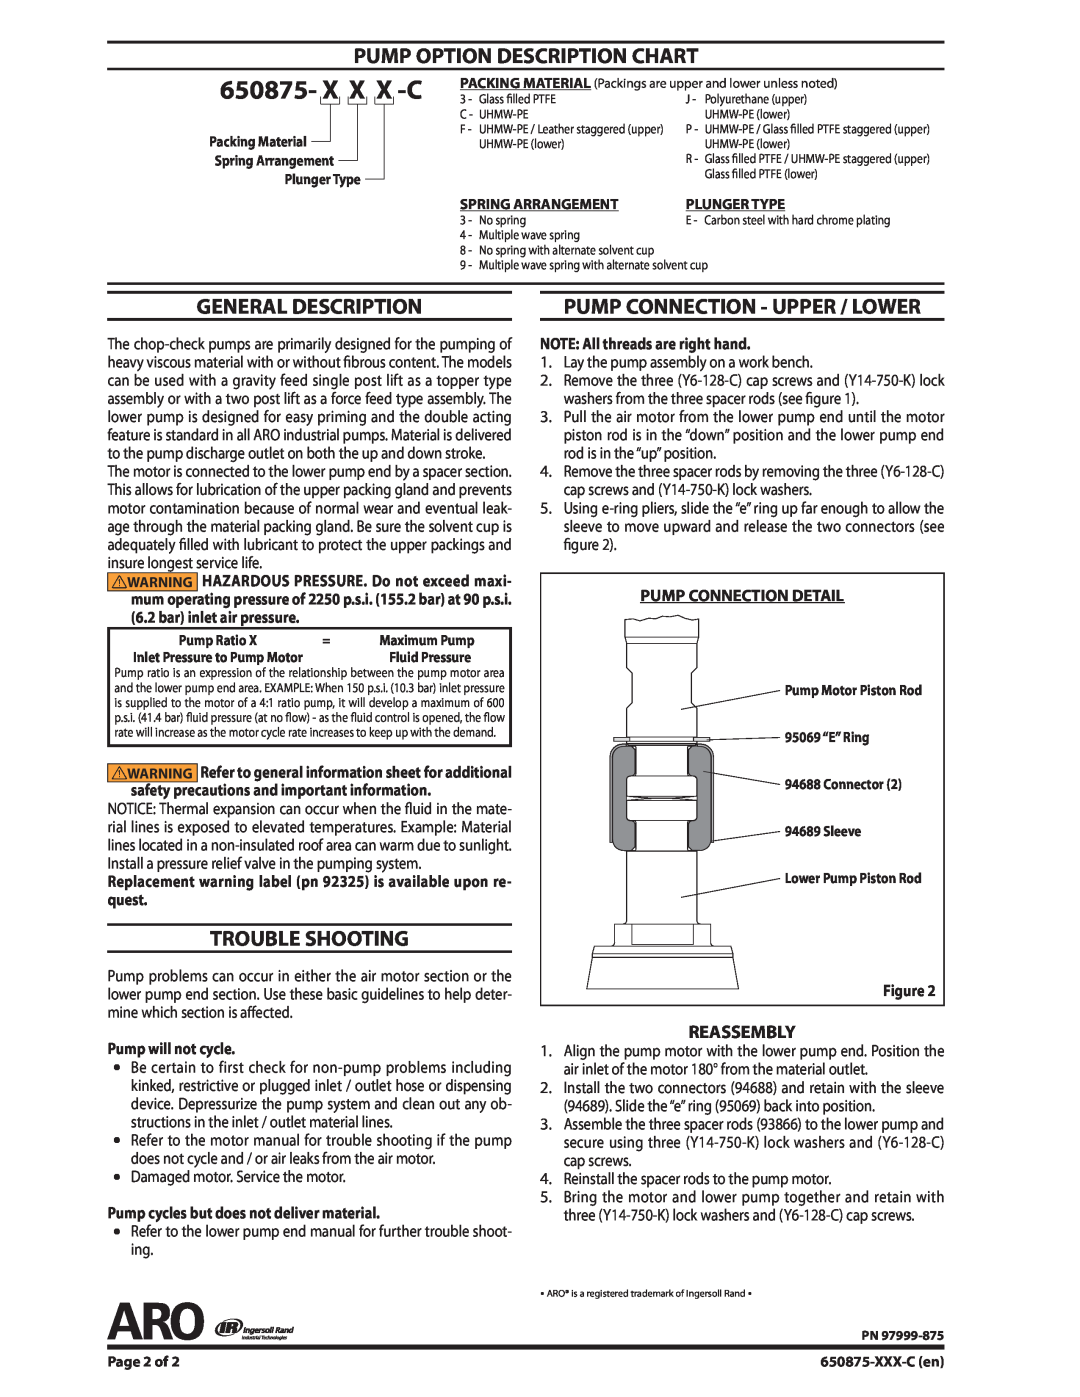 Ingersoll-Rand 650875-XXX-C specifications Pump Option Description Chart, General Description, Trouble Shooting, Reassembly 